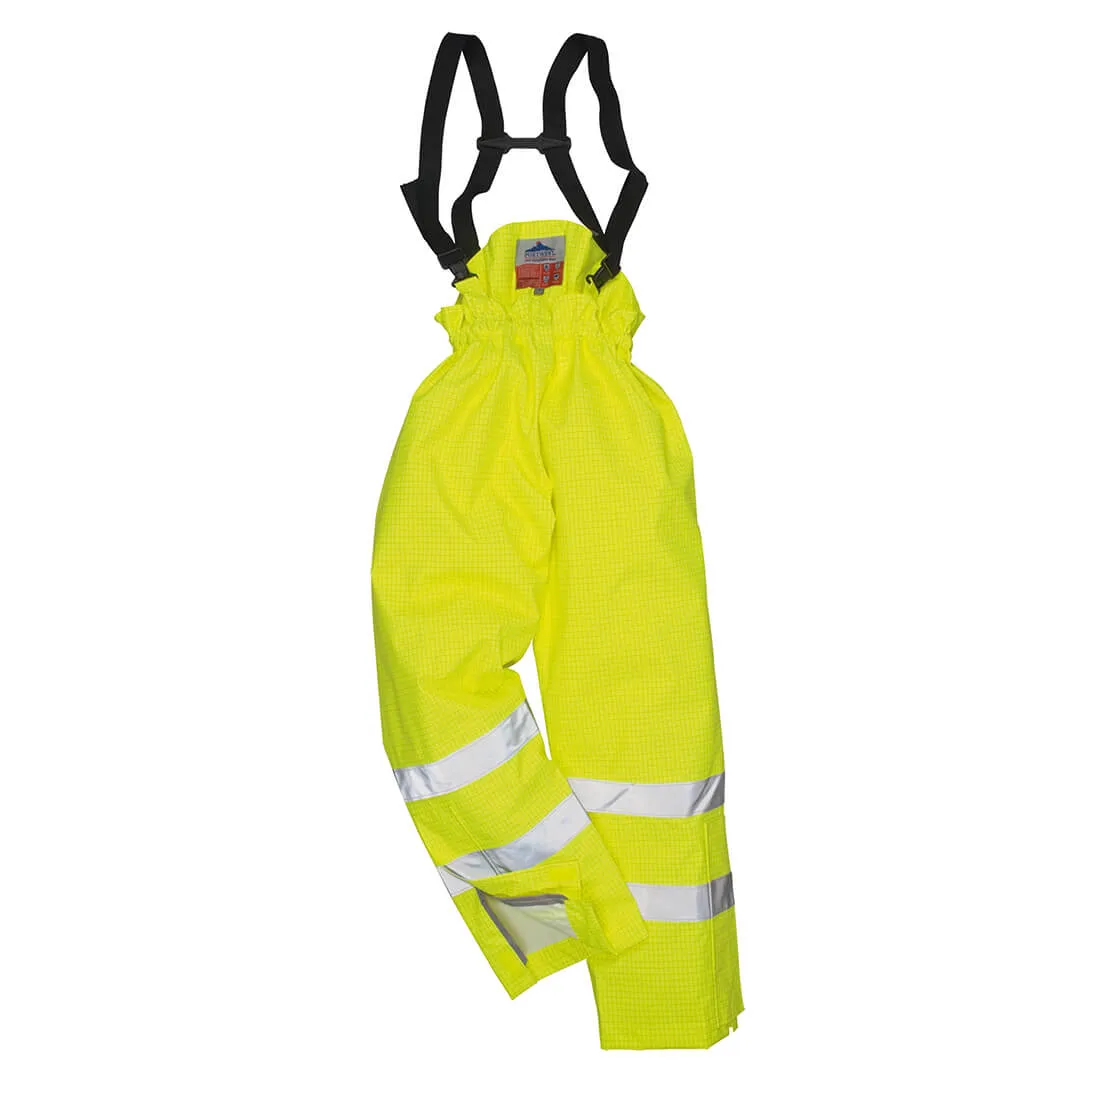 Biz Flame Hi Vis Flame Resistant Rain Lined Trousers - Yellow, L